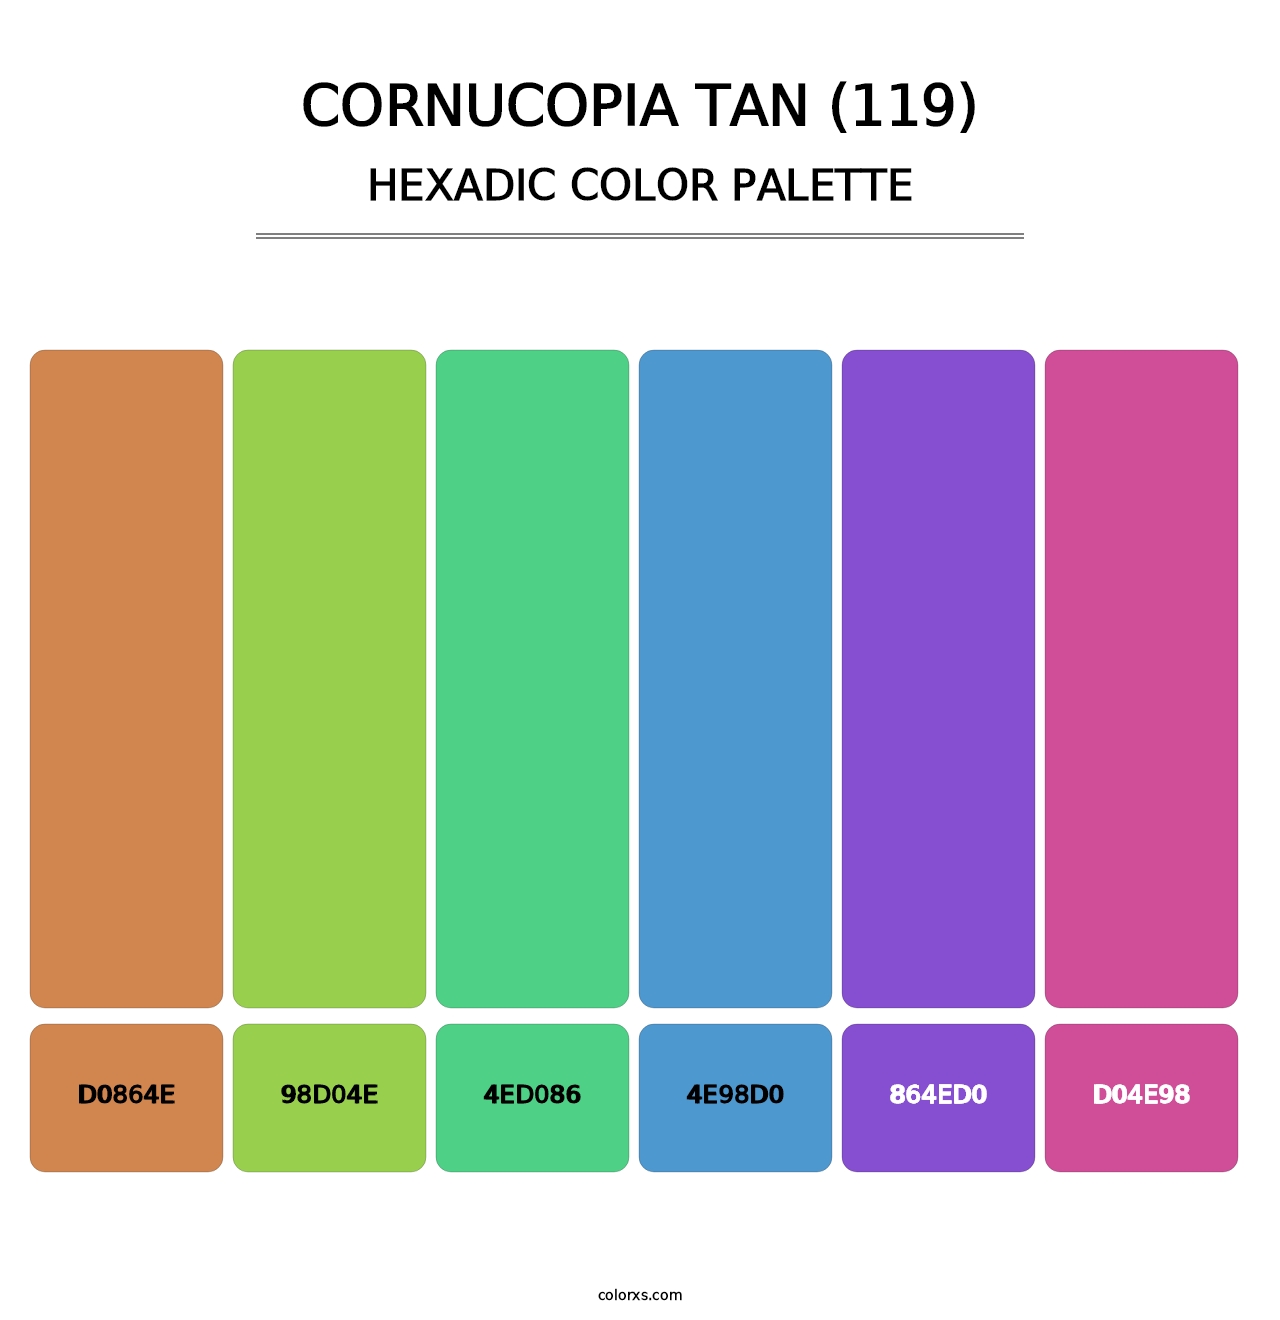 Cornucopia Tan (119) - Hexadic Color Palette